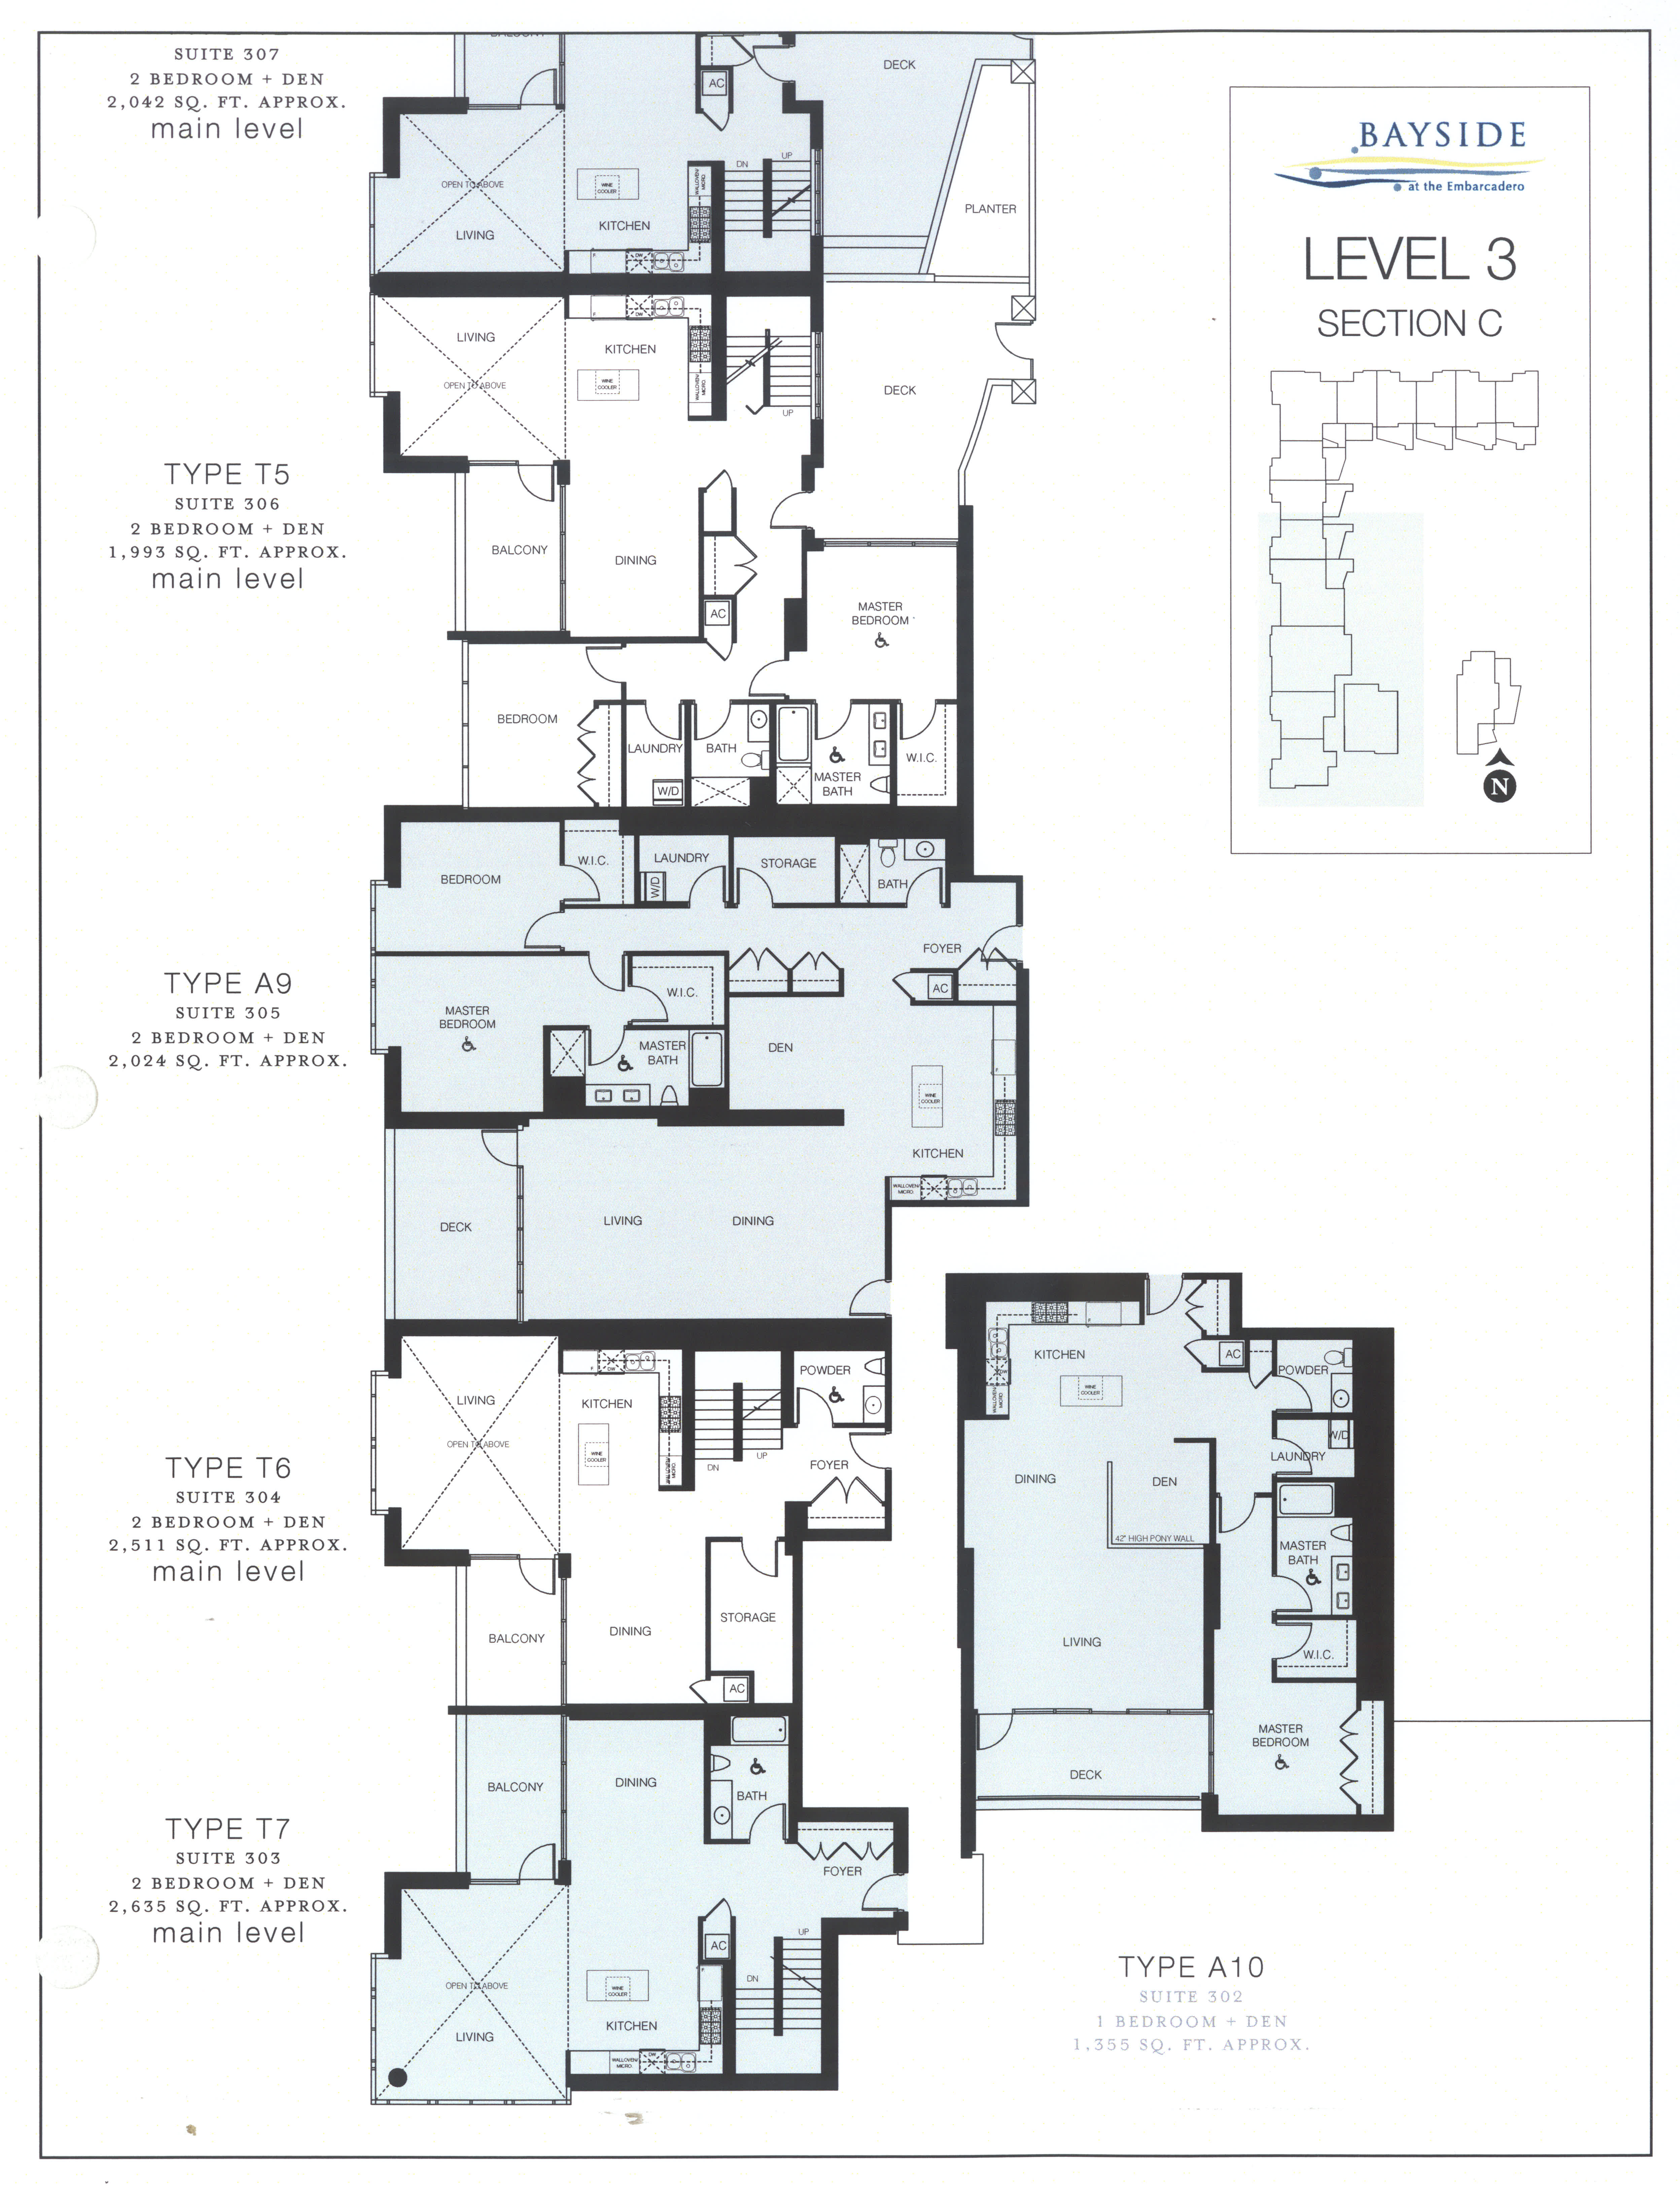 Bayside Floor Plan Level 3 Section C